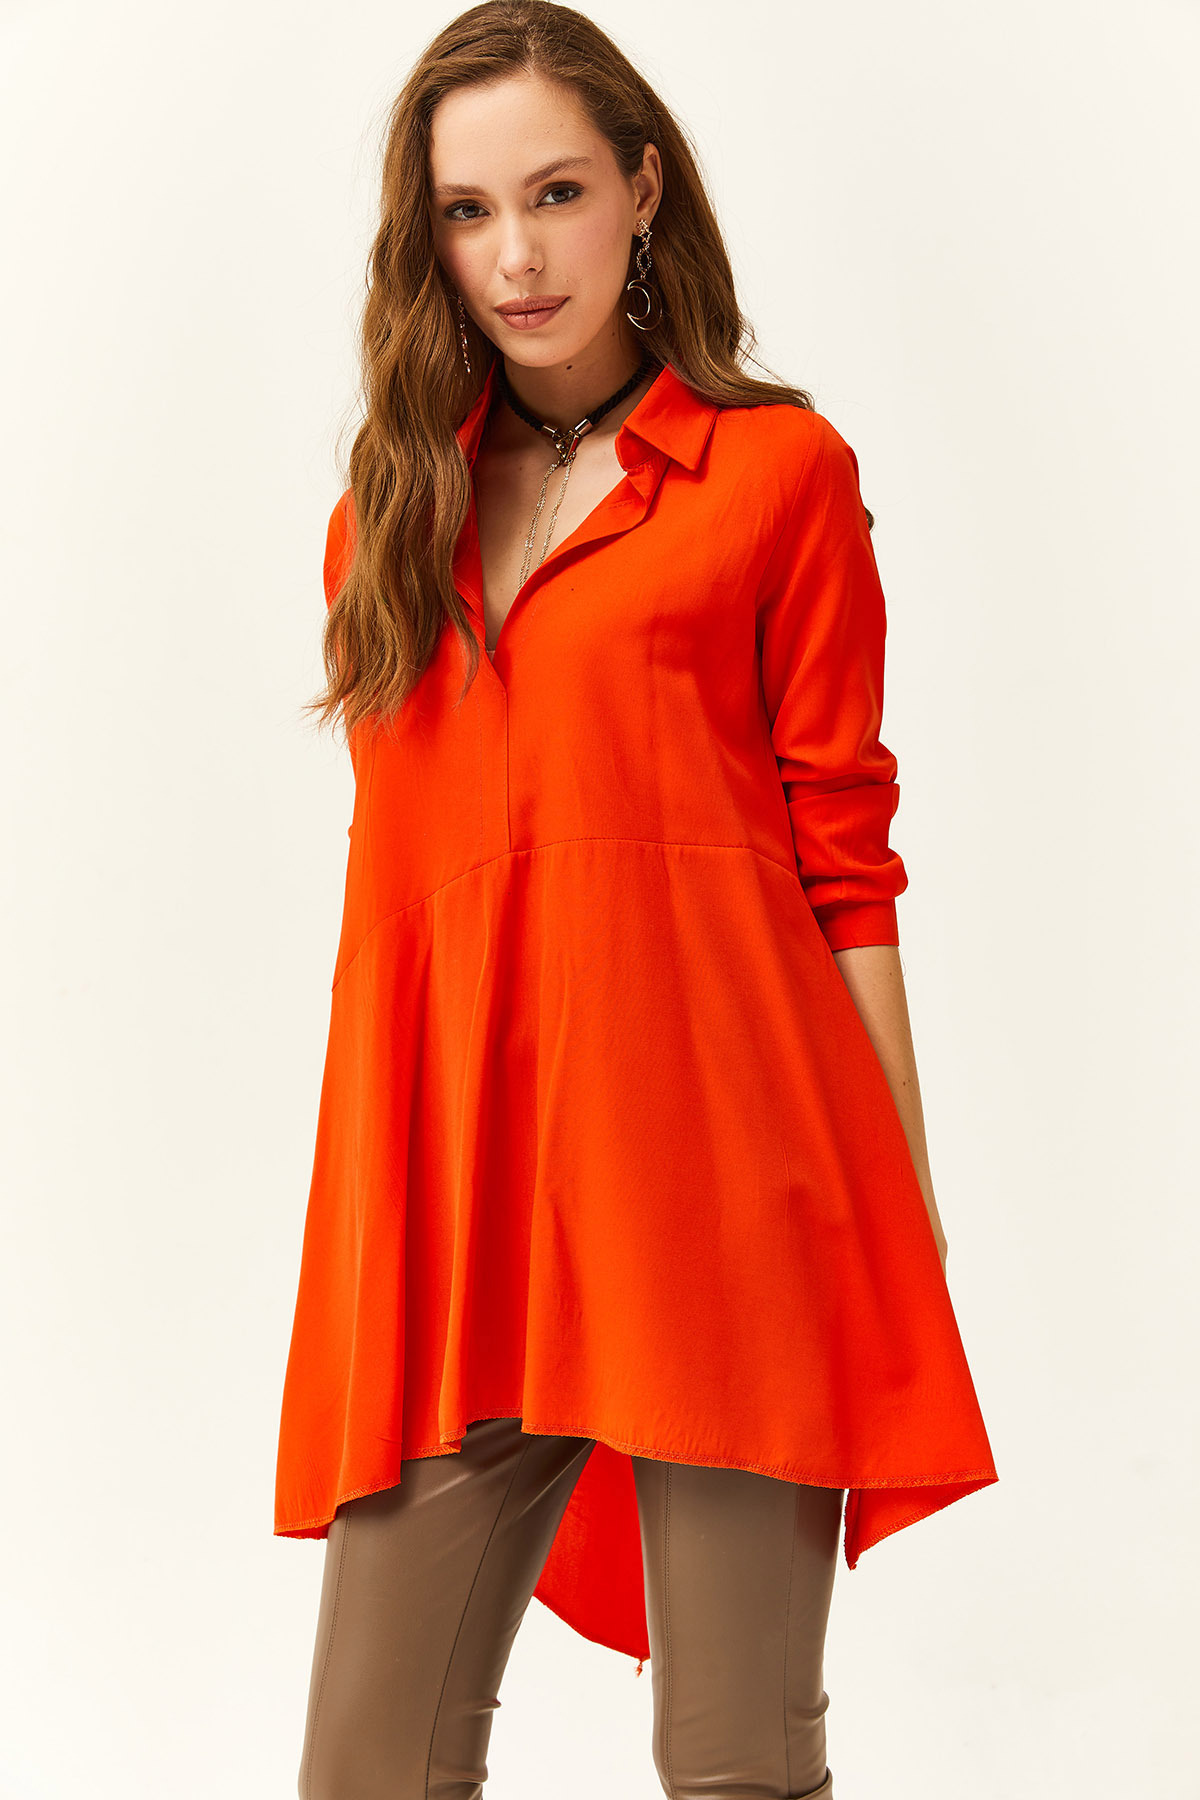 Olalook Women's Orange Shirt Collar Asymmetric Tunic